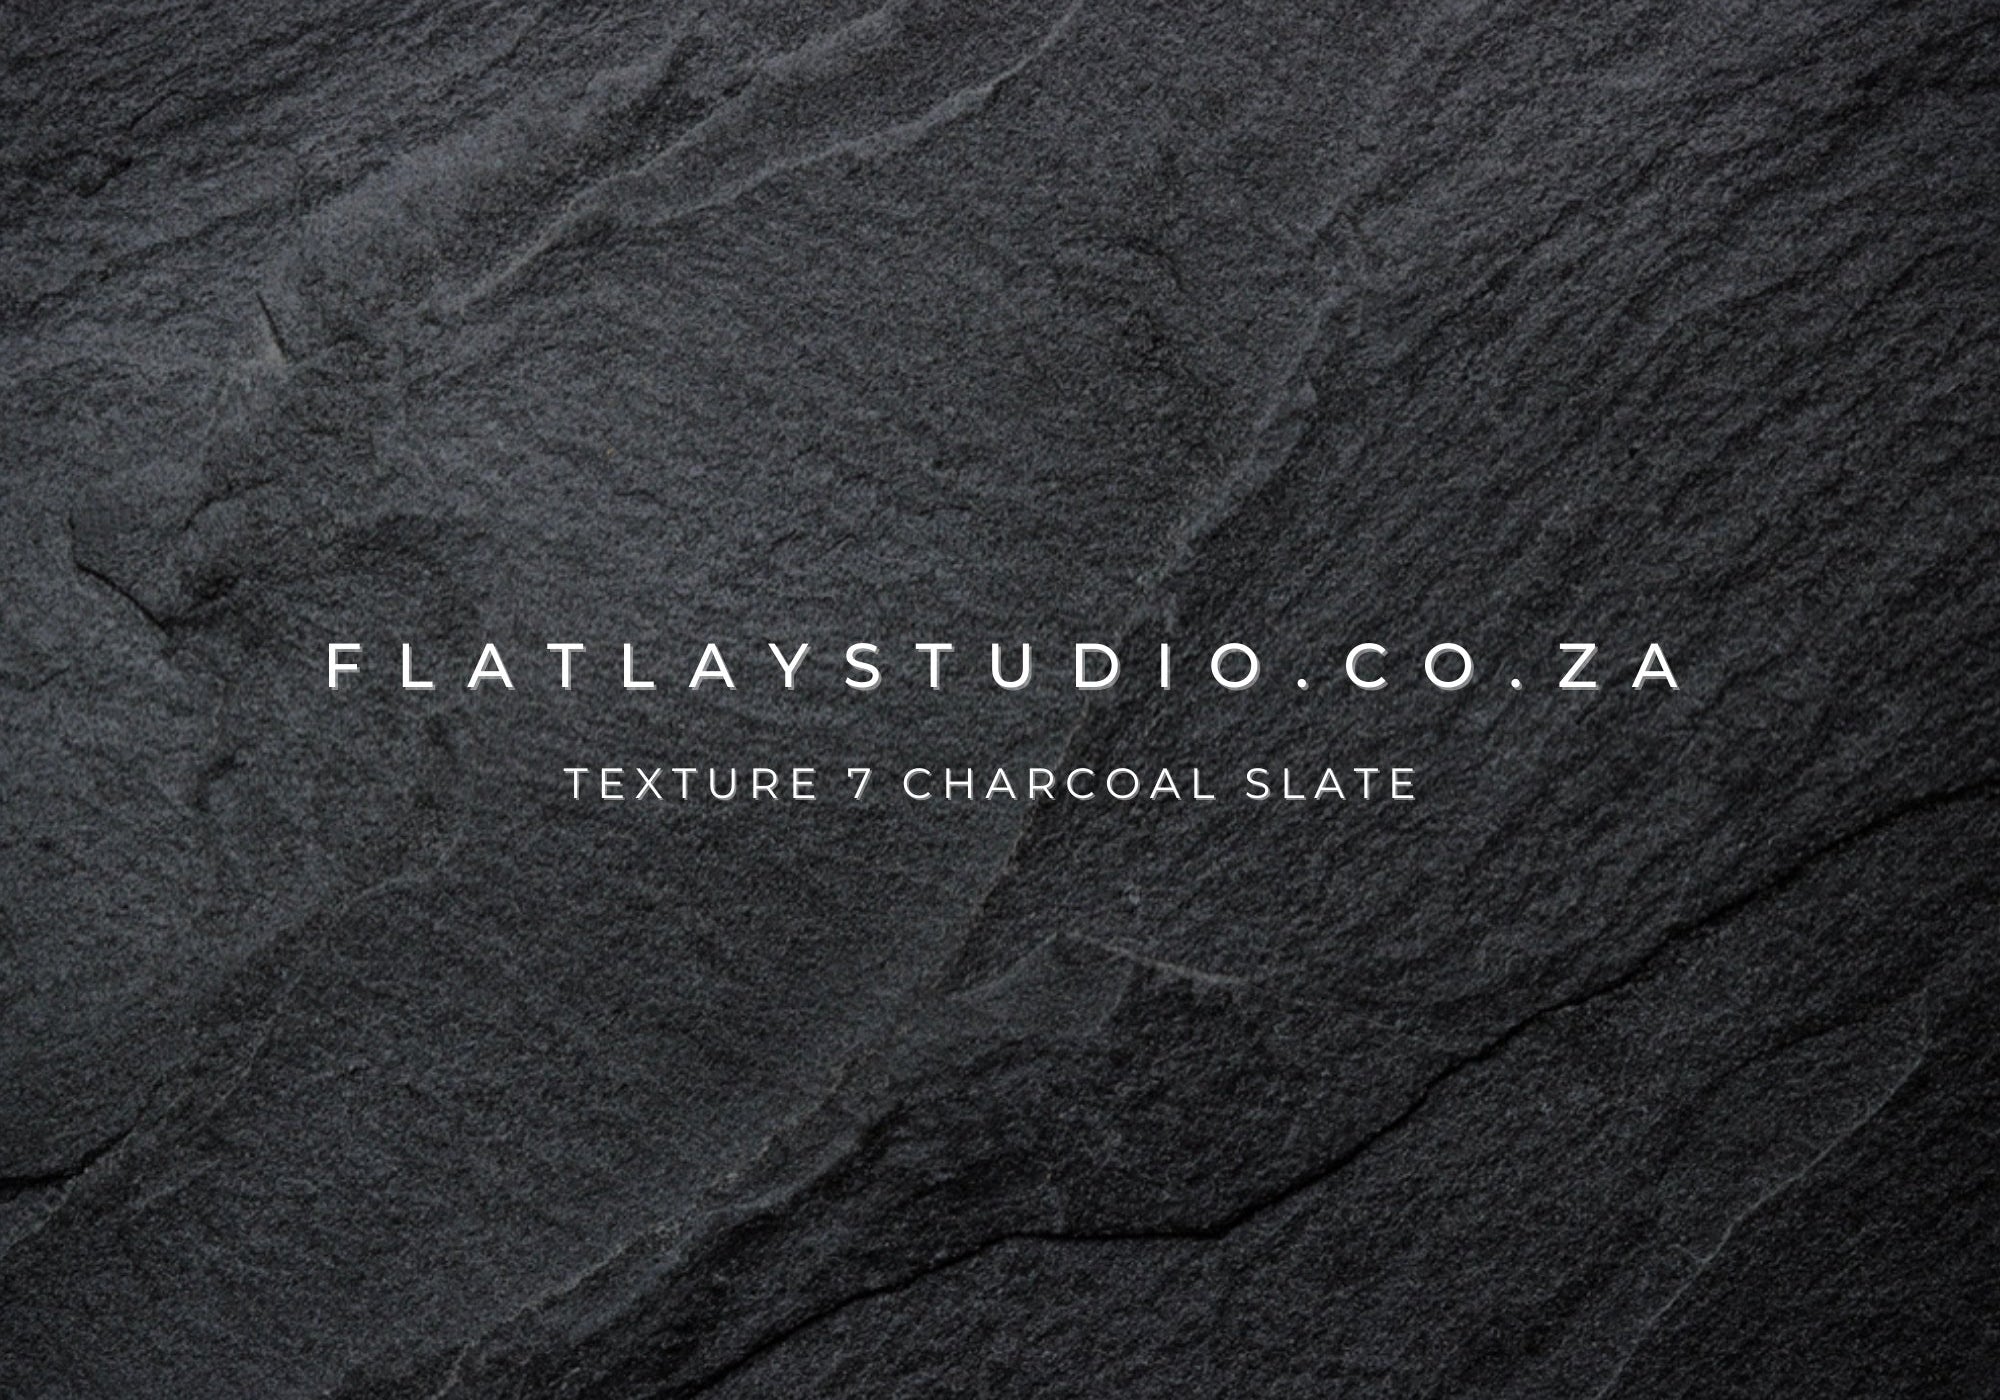 Texture 7 Charcoal Slate - FlatlayStudio Flatlay Styling Board